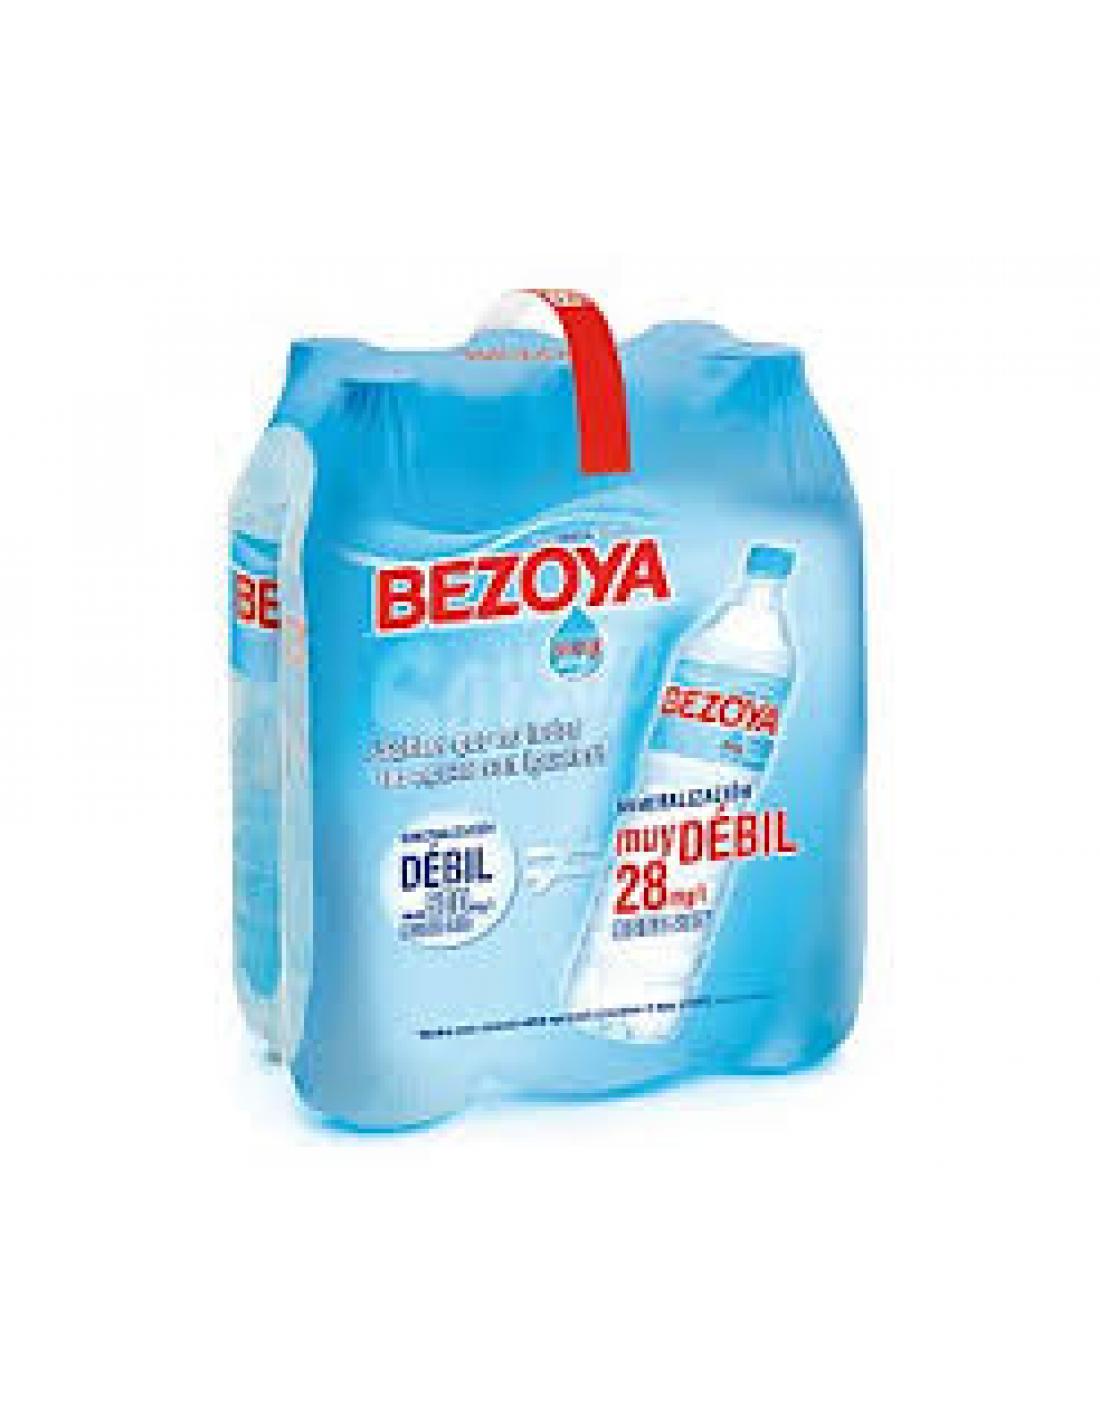 Agua mineral Bezoya 1.5 litros palet 84 packs de 6 botellas